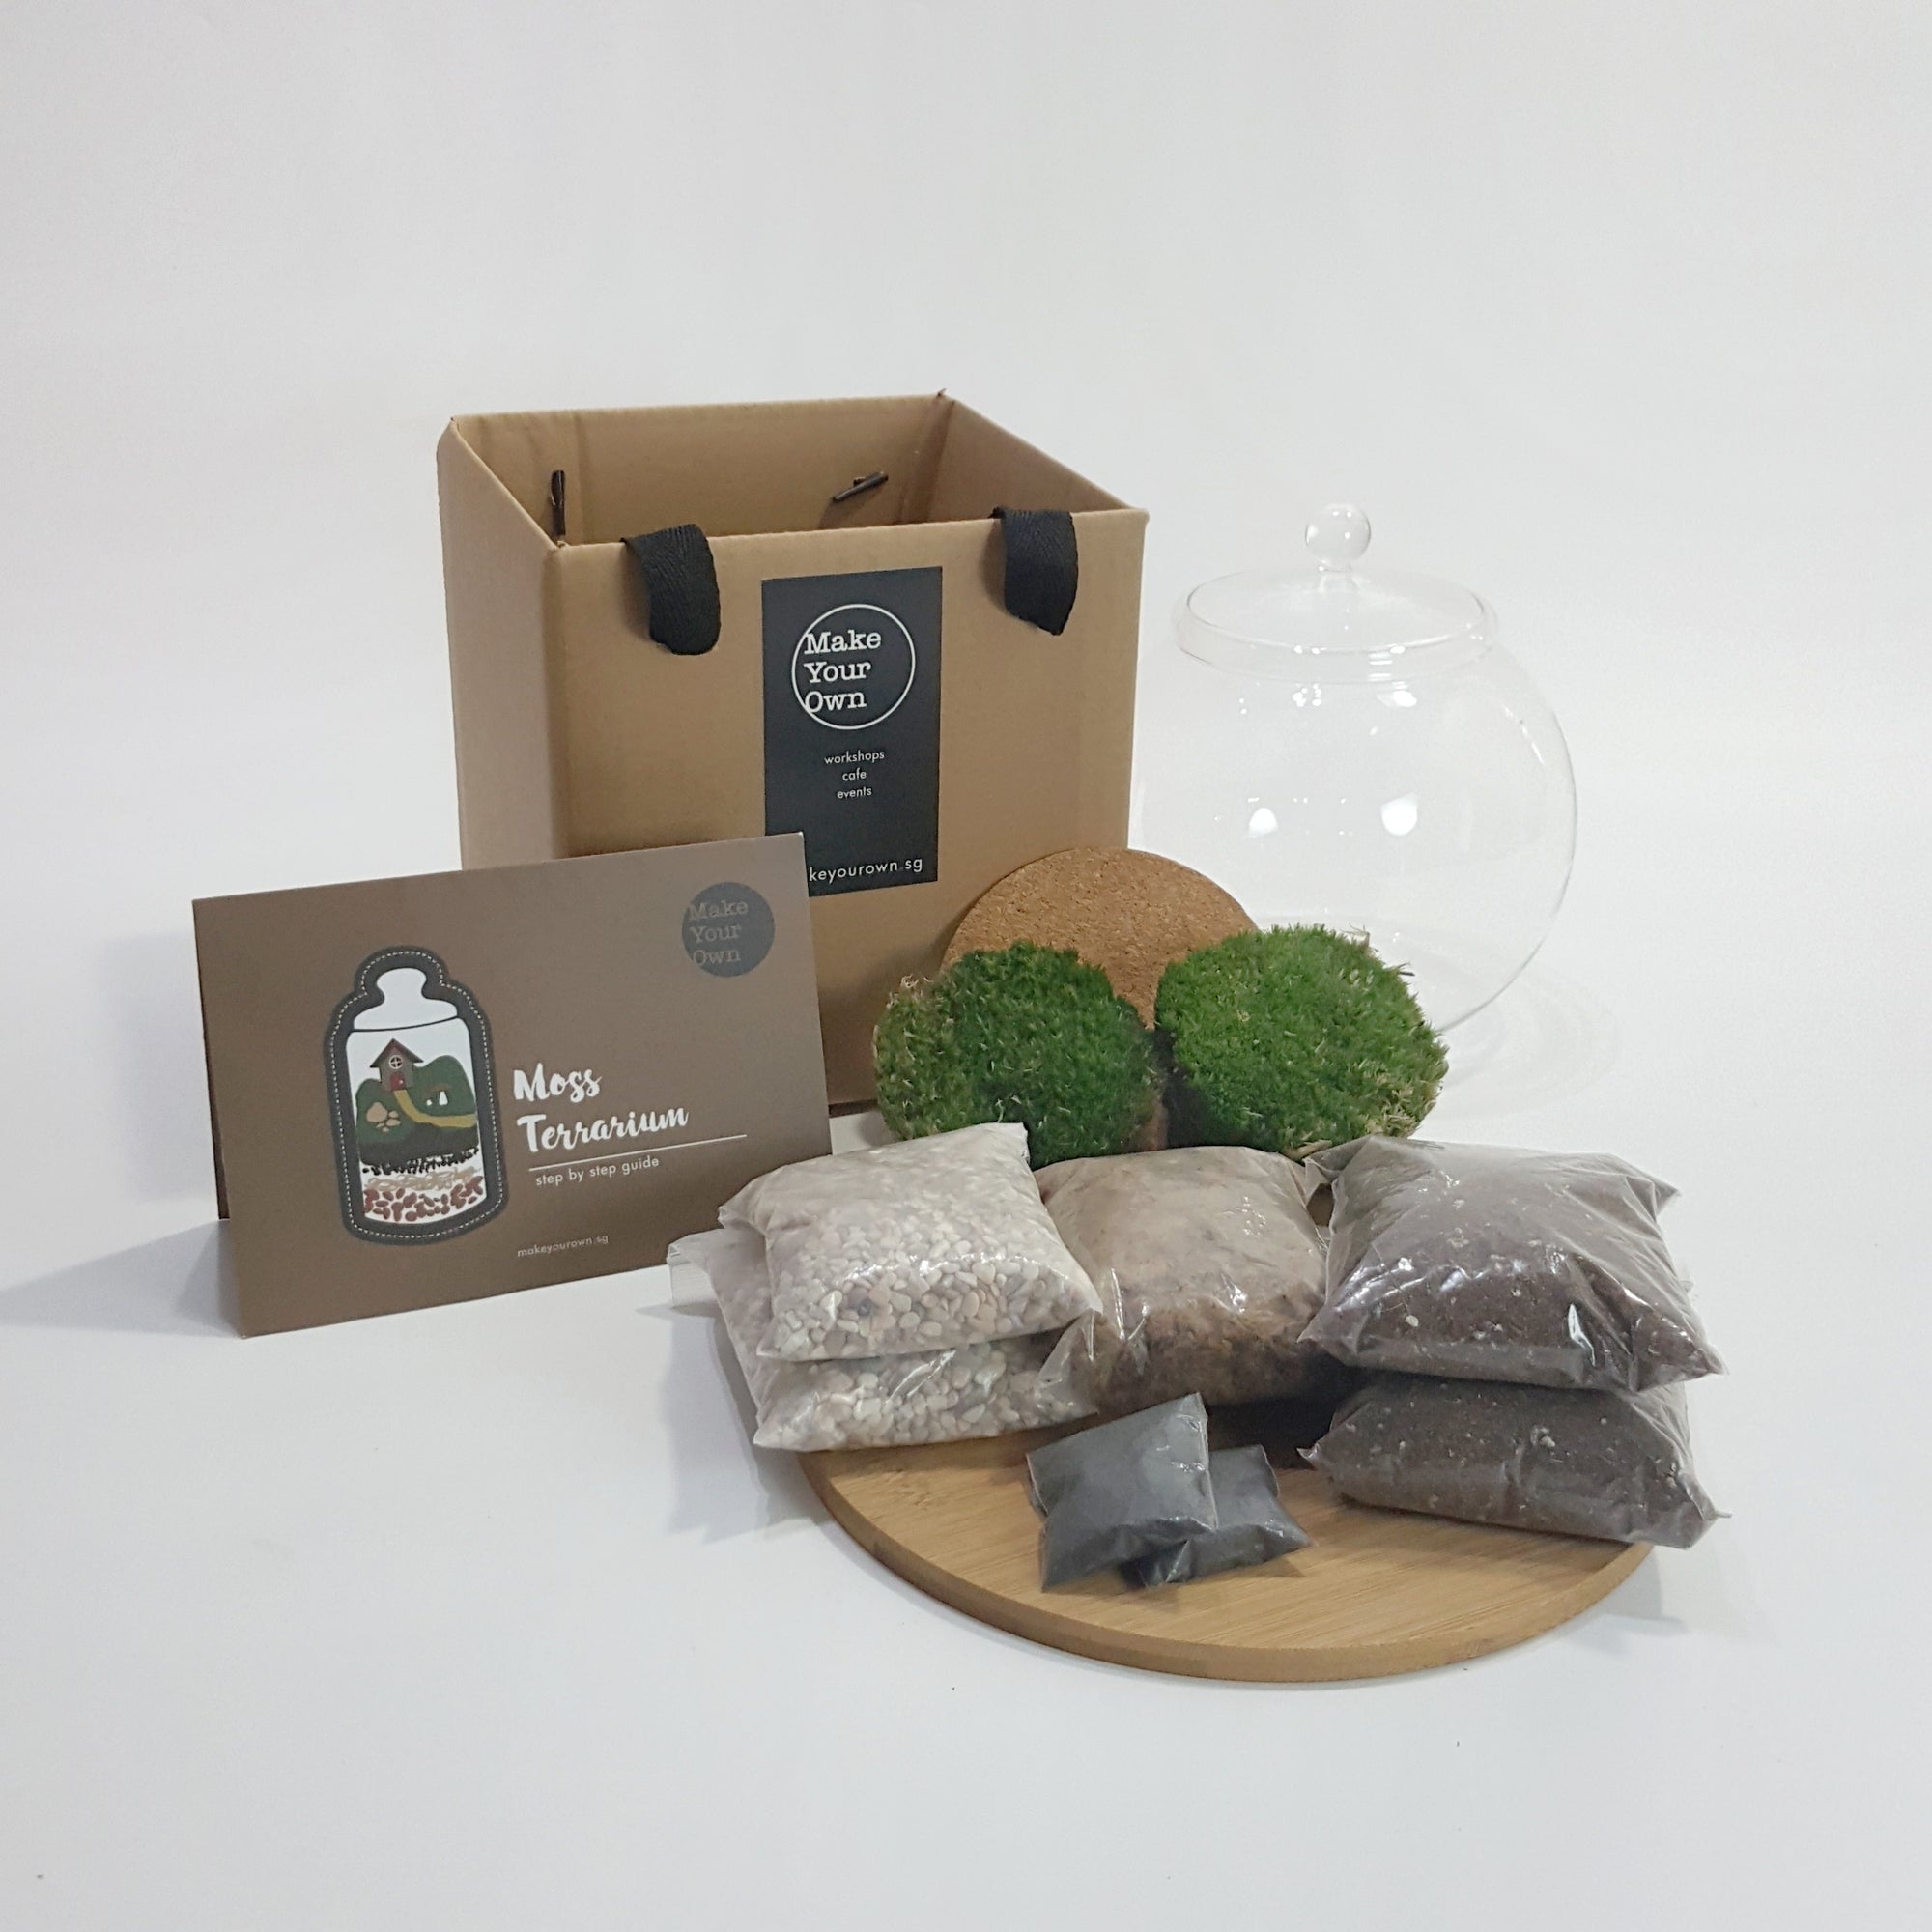 Moss Terrarium (Globe Lid Jar) DIY Kit